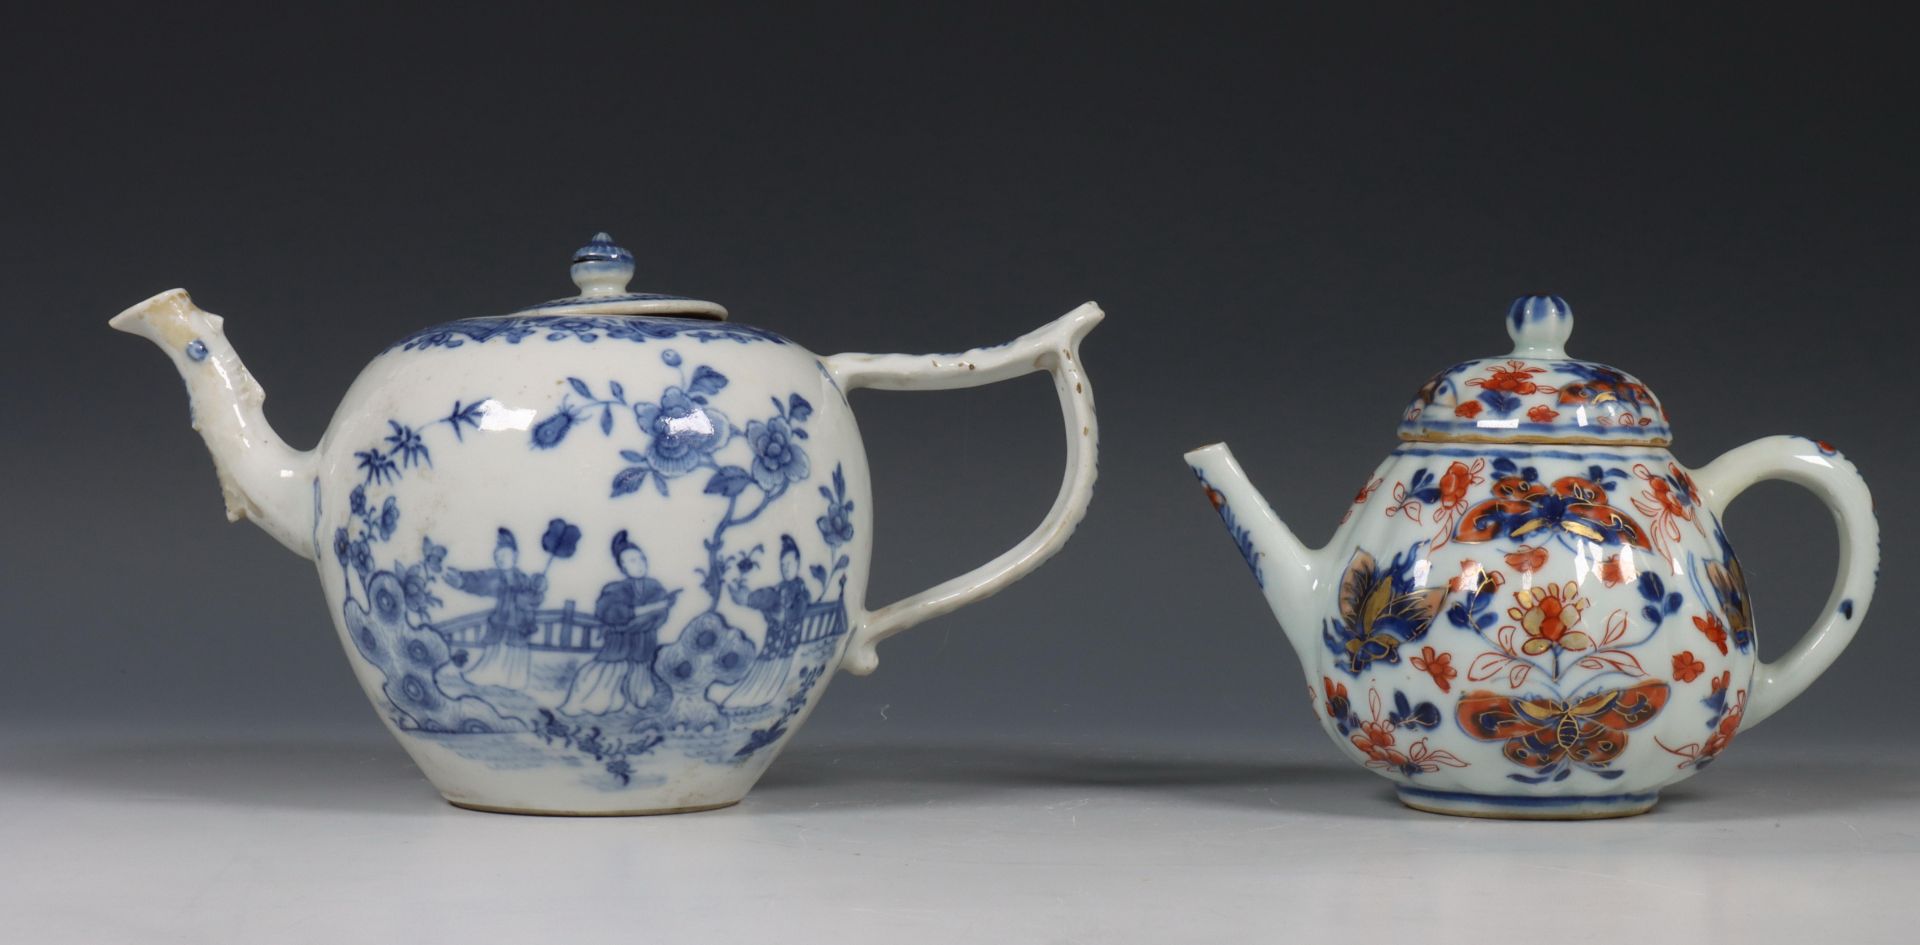 China, blauw-wit porseleinen en een Imari porseleinen theepot, 18e eeuw,